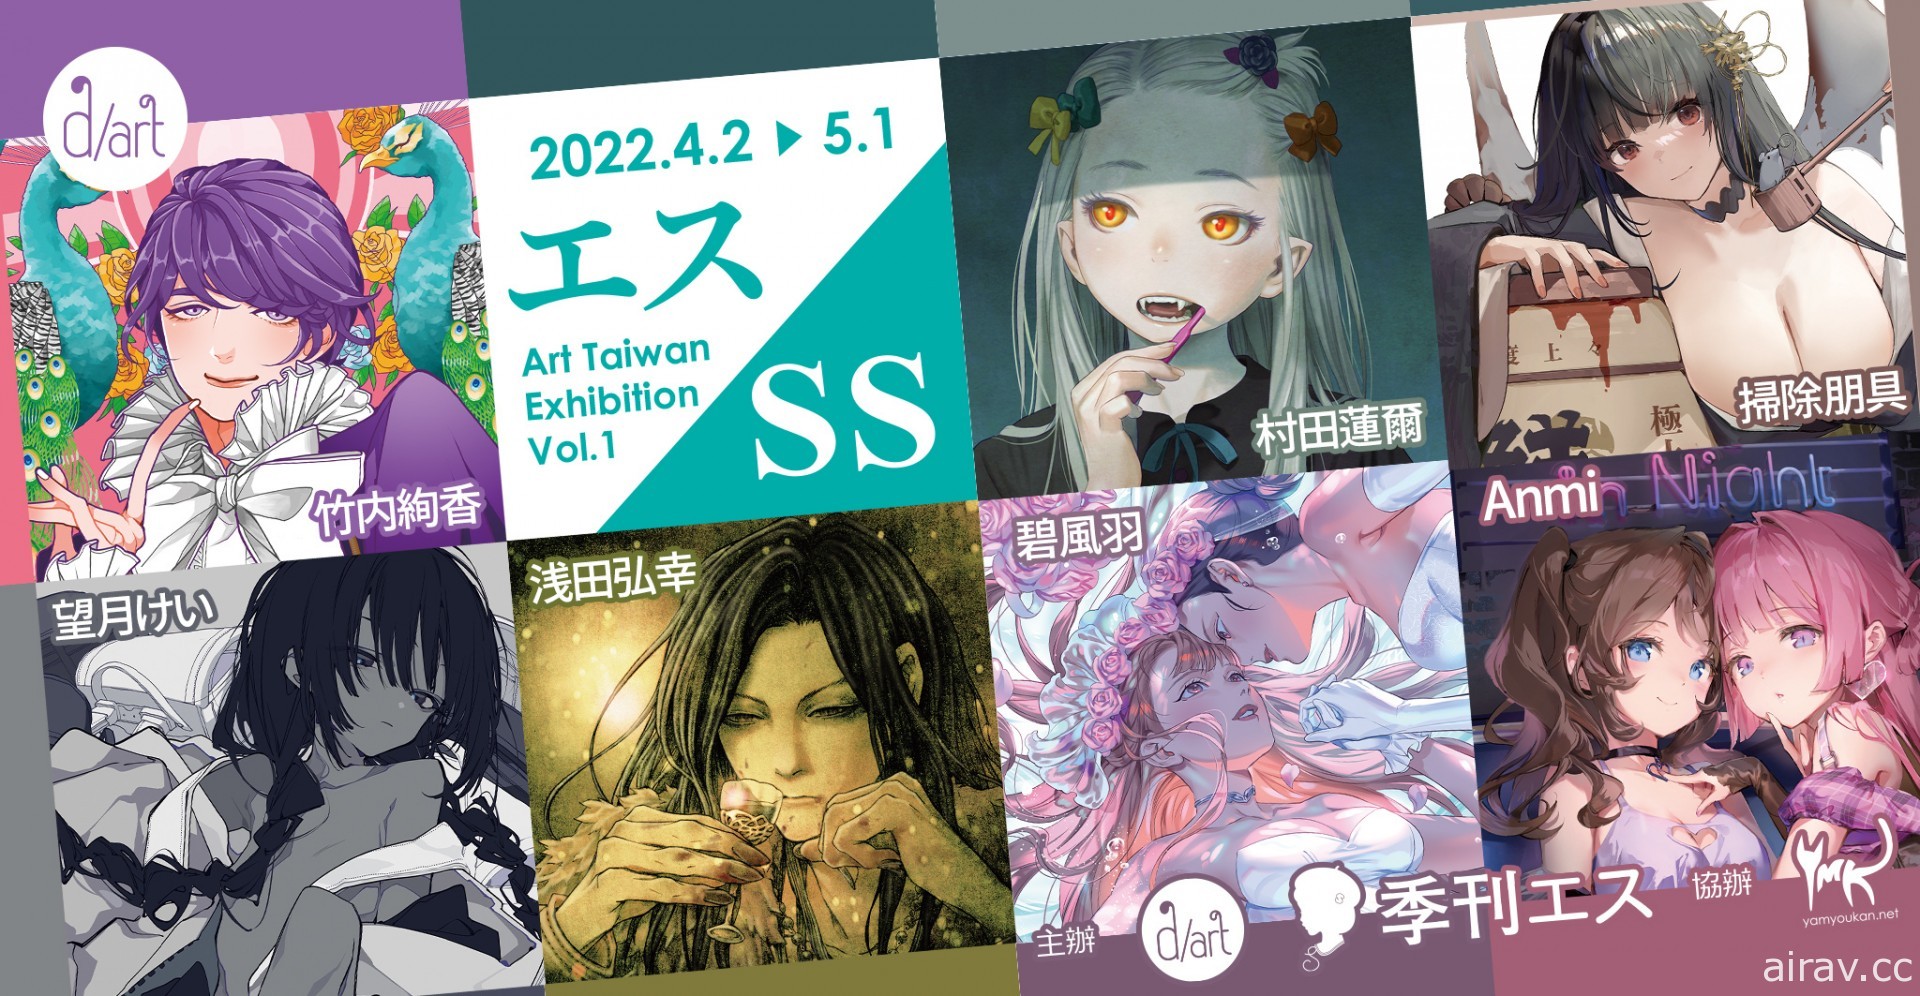 “エス/SS Art Taiwan Exhibition Vol.1”联展 4 月起于 d/art 正式举行